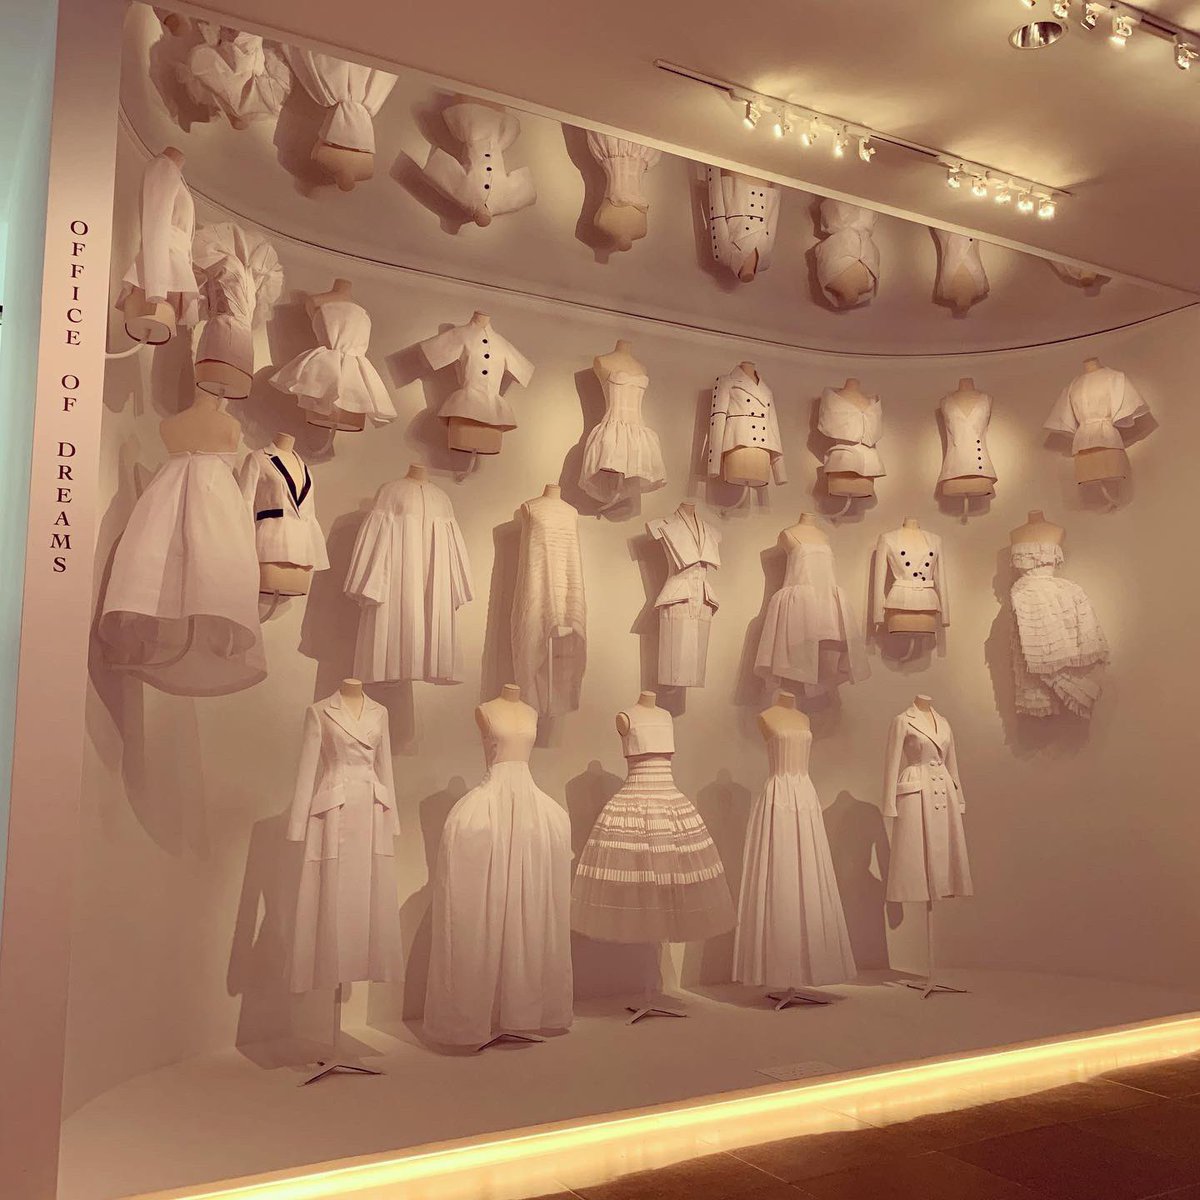 ❤️ed seeing the different eras of the house of #Dior @DallasMuseumArt. Stunning exhibit! #ChristianDior #fromparistotheworld #fashion #YvesSaintLaurent #MarcBohan #GianfrancoFerré #JohnGalliano #RafSimons #MariaGraziaChiuri #art #museum #dallas